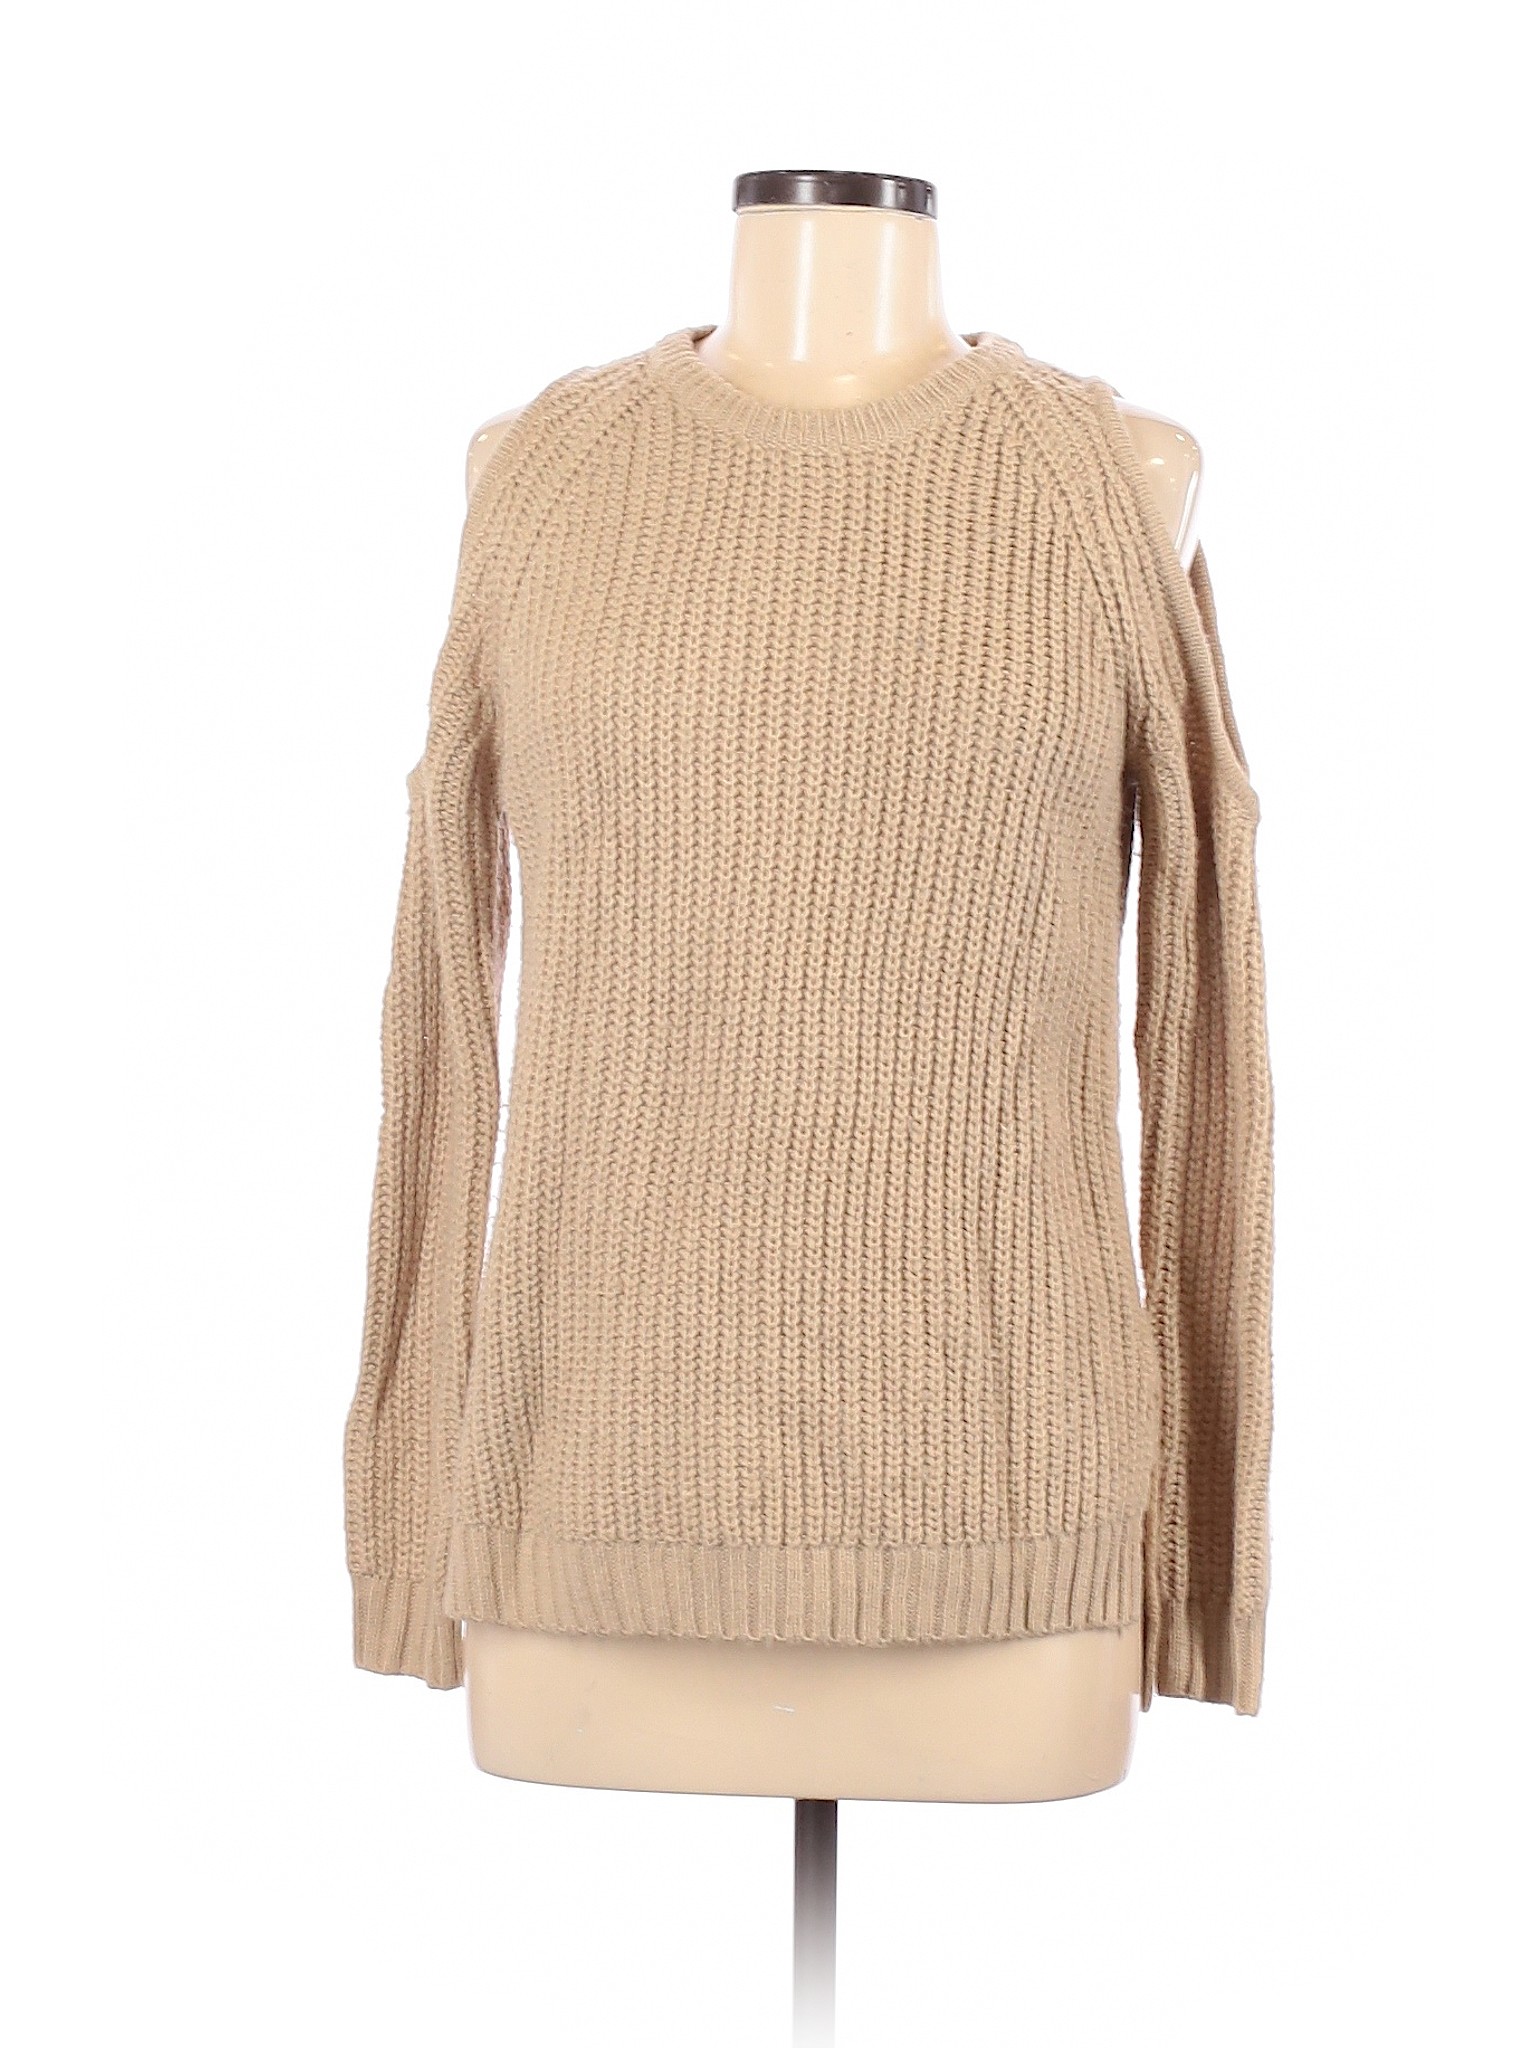 Forever 21 Women Brown Pullover Sweater S | eBay